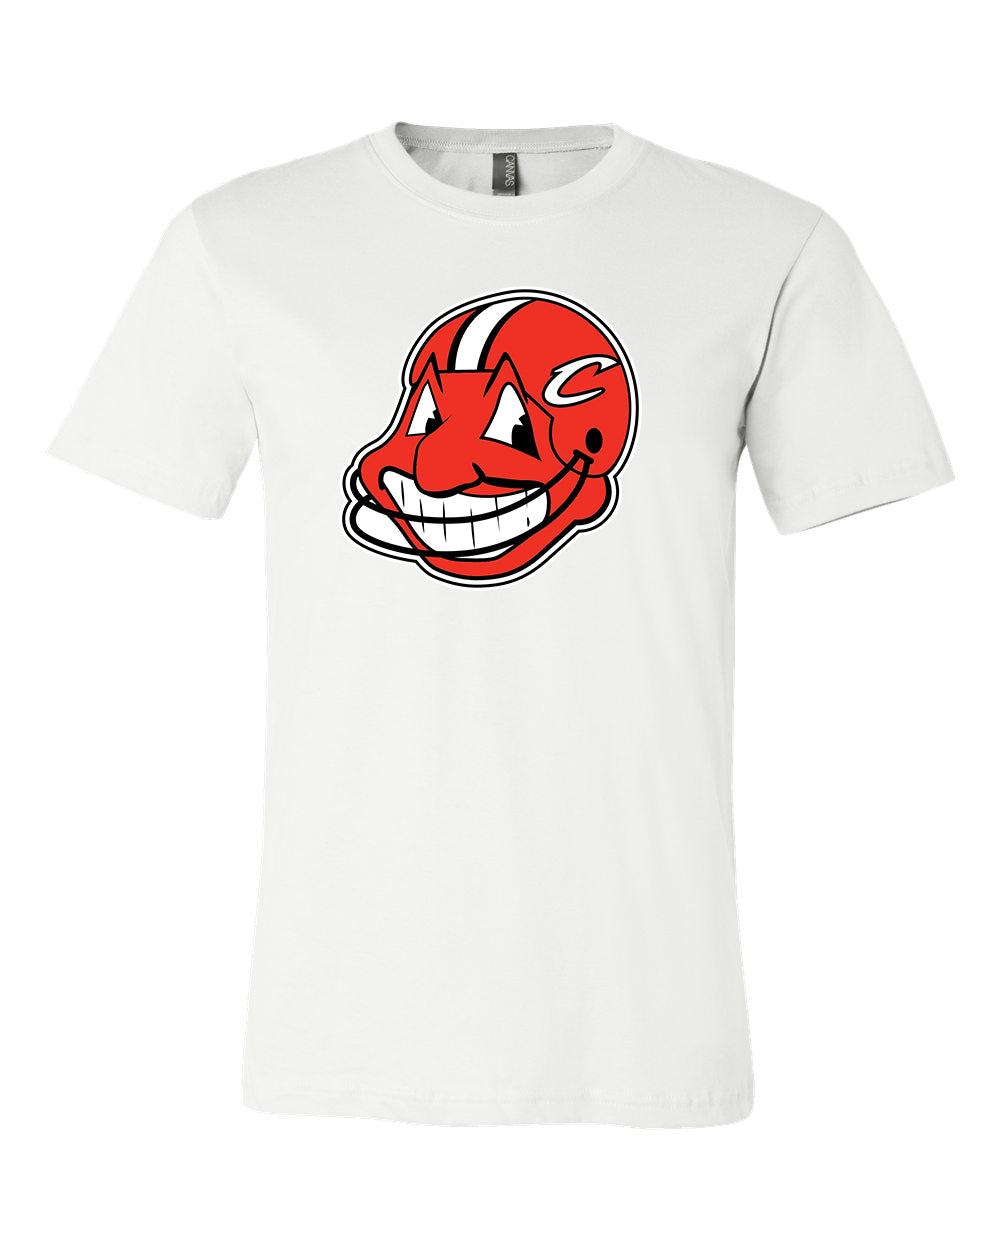 Cleveland Indians Cleveland Browns MASH UP Logo T-shirt 6 Sizes S-3XL!